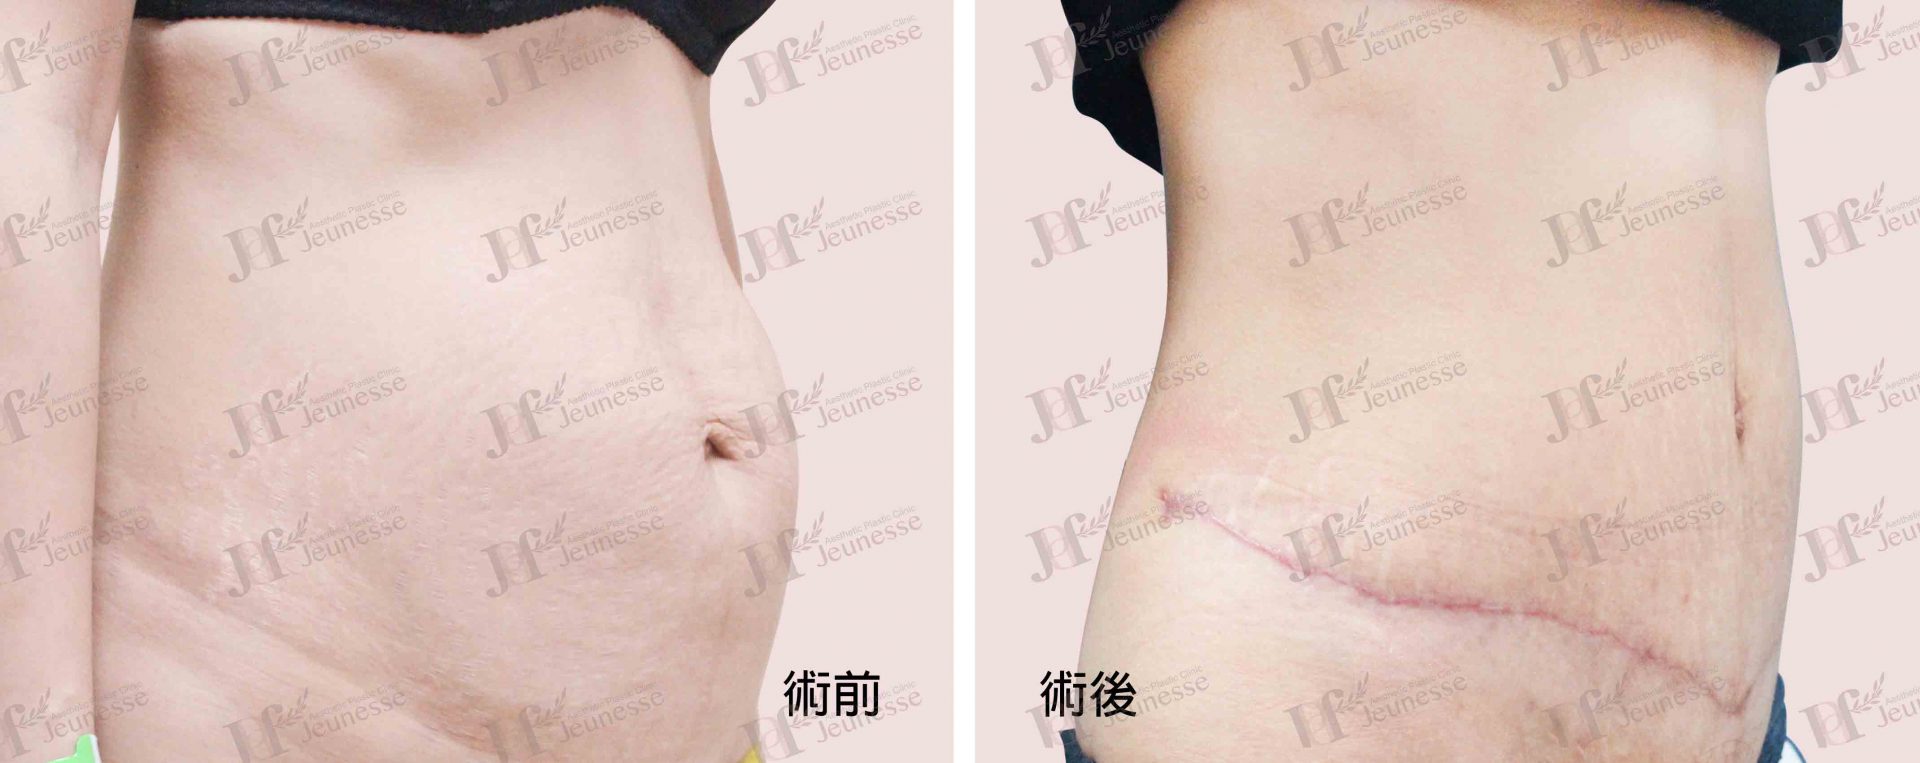 Abdominoplasty腹部成形術及抽脂手術 case 5 45度-浮水印